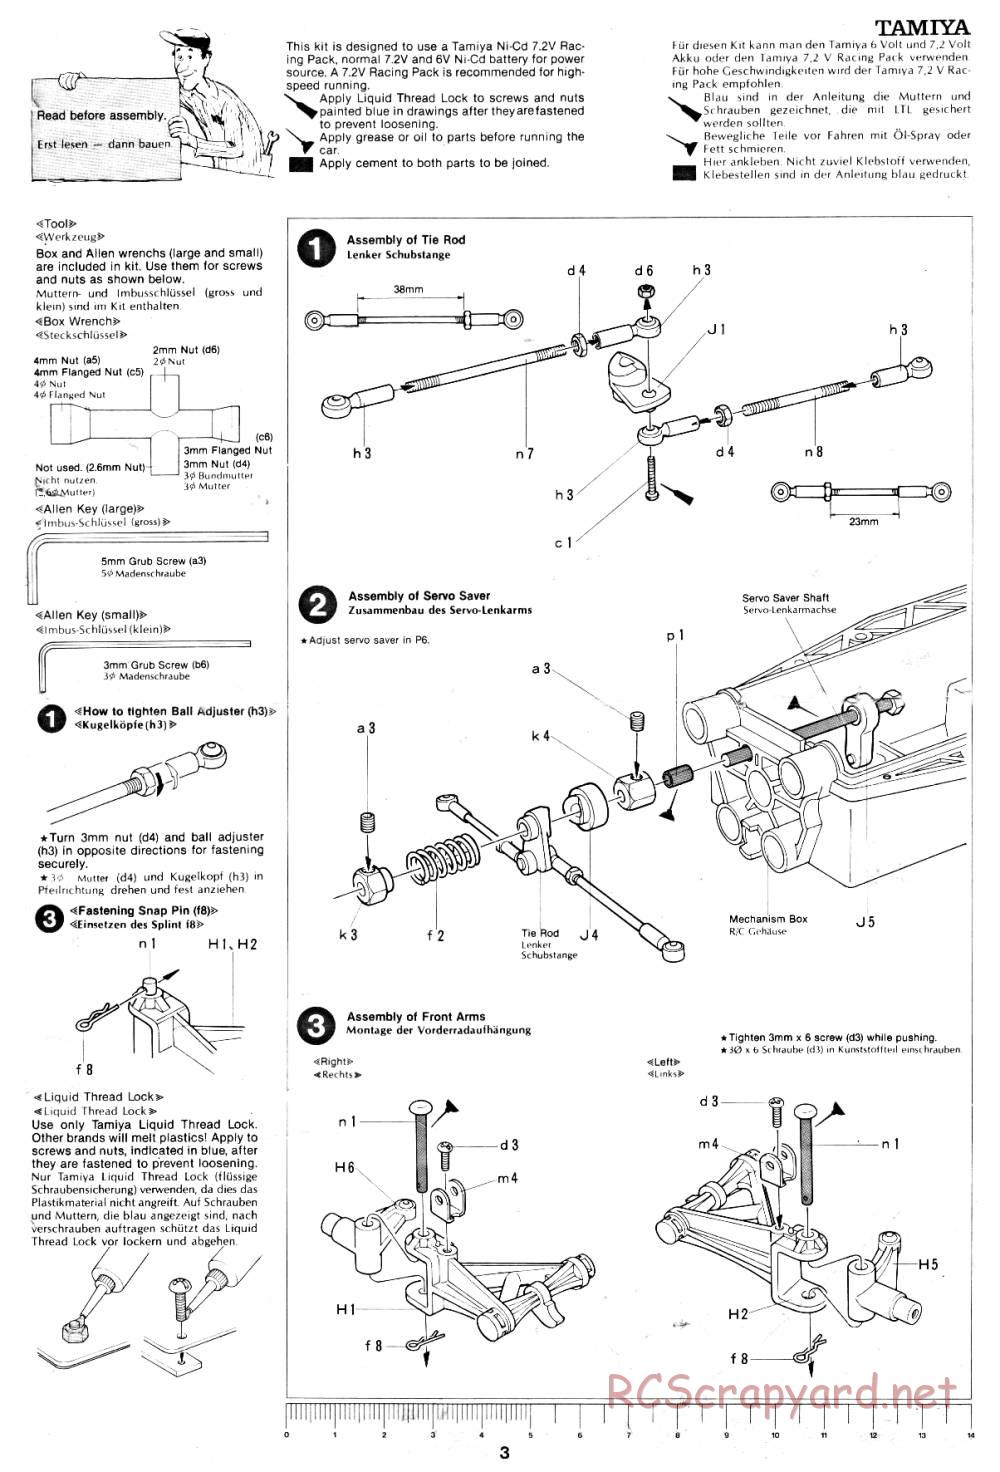 Tamiya - Audi Quattro Rally - 58036 - Manual - Page 3